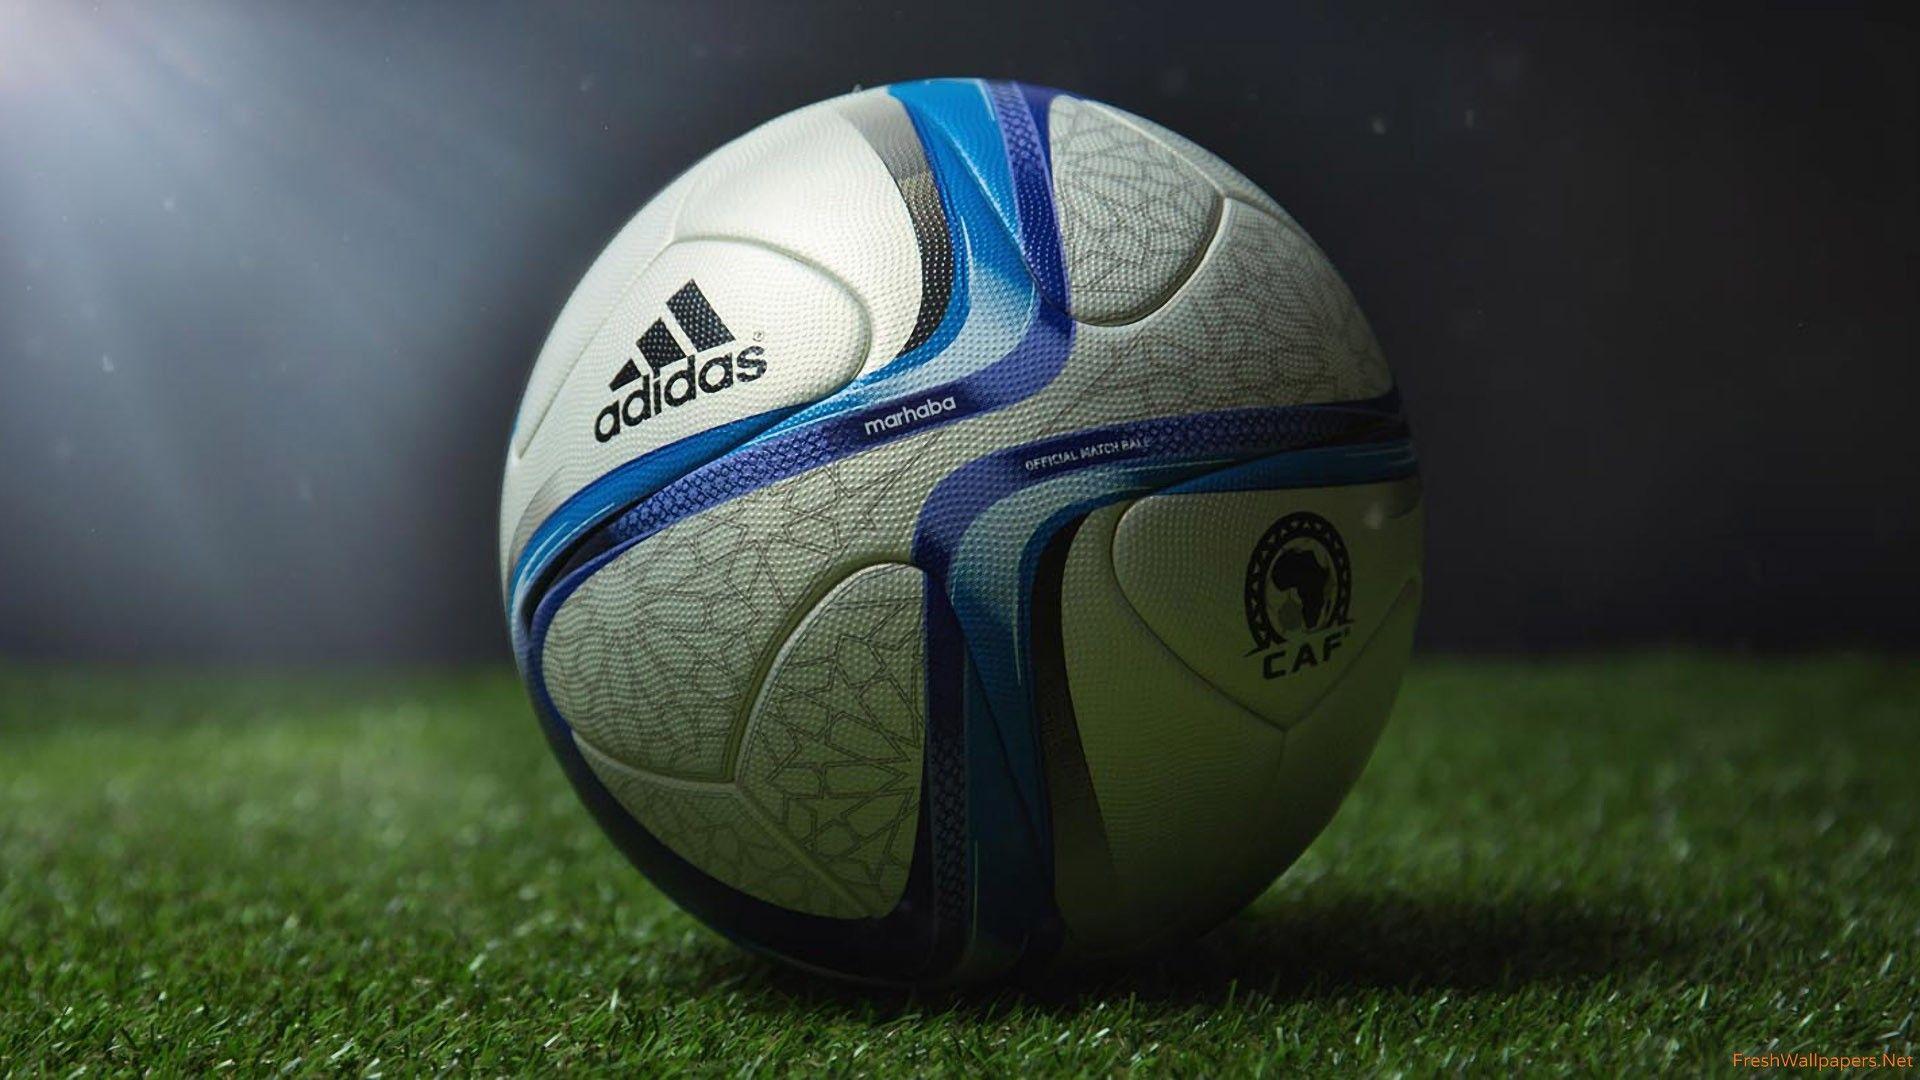 Adidas Marhaba 2015 Africa Cup Ball wallpaper